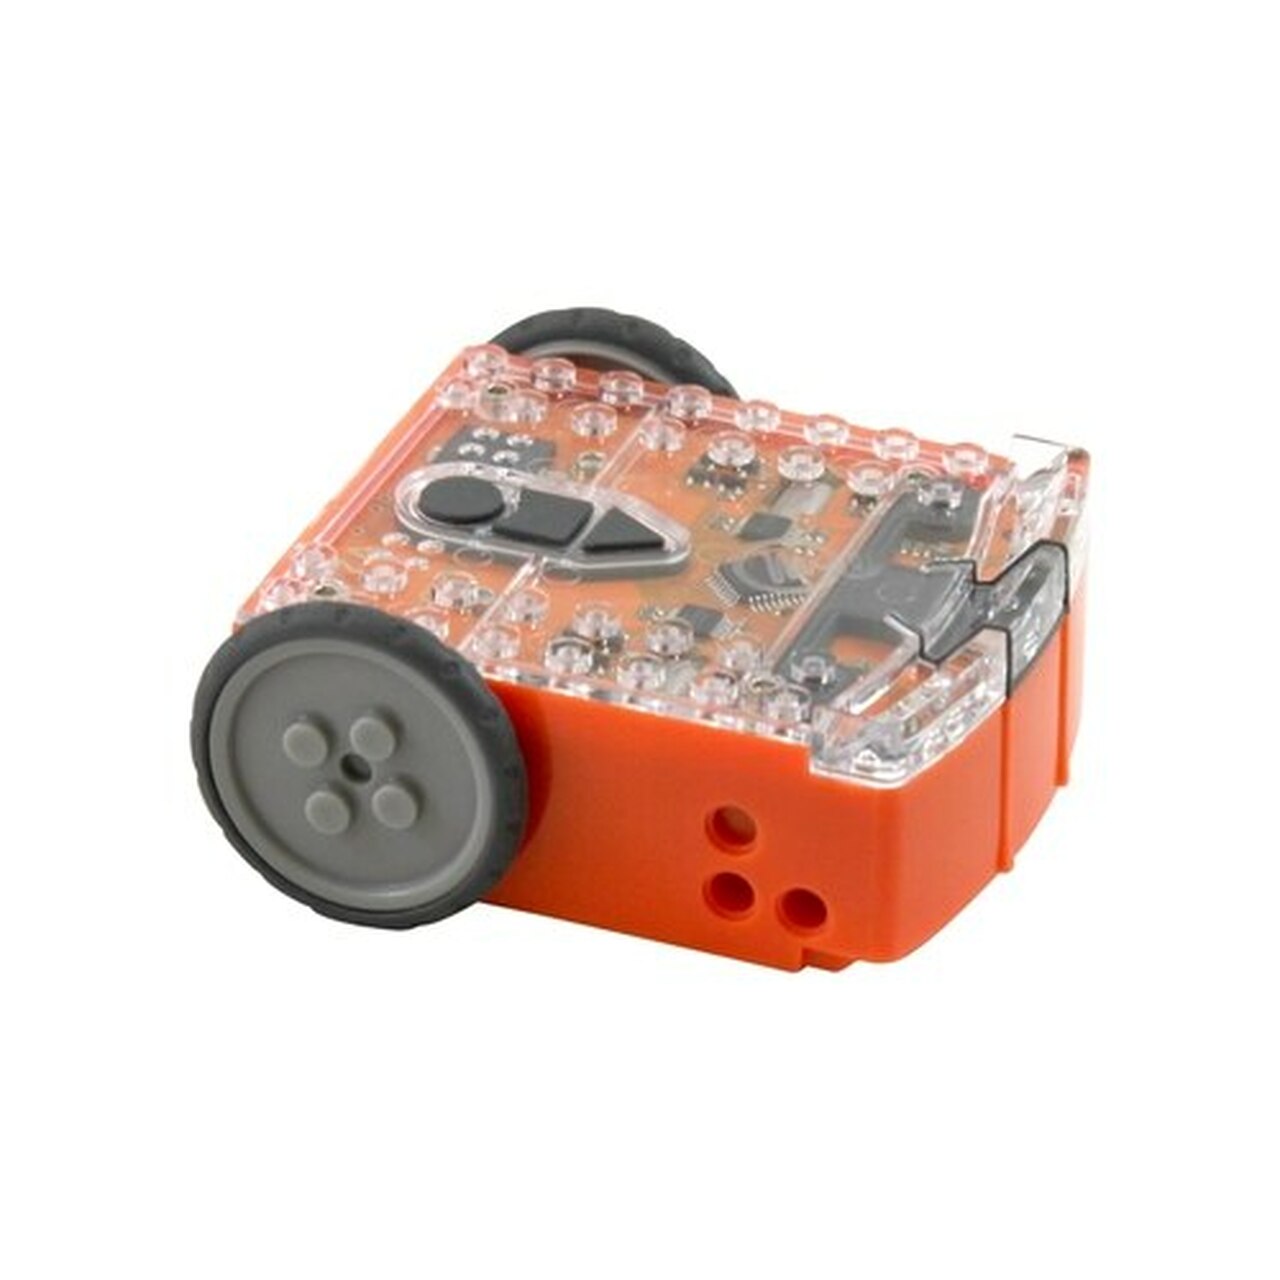 Edison Educational Robot Kit – Set of 30 for STEAM Education – Robotics and Coding - ARVRedtech.com | AR & VR Education Technology